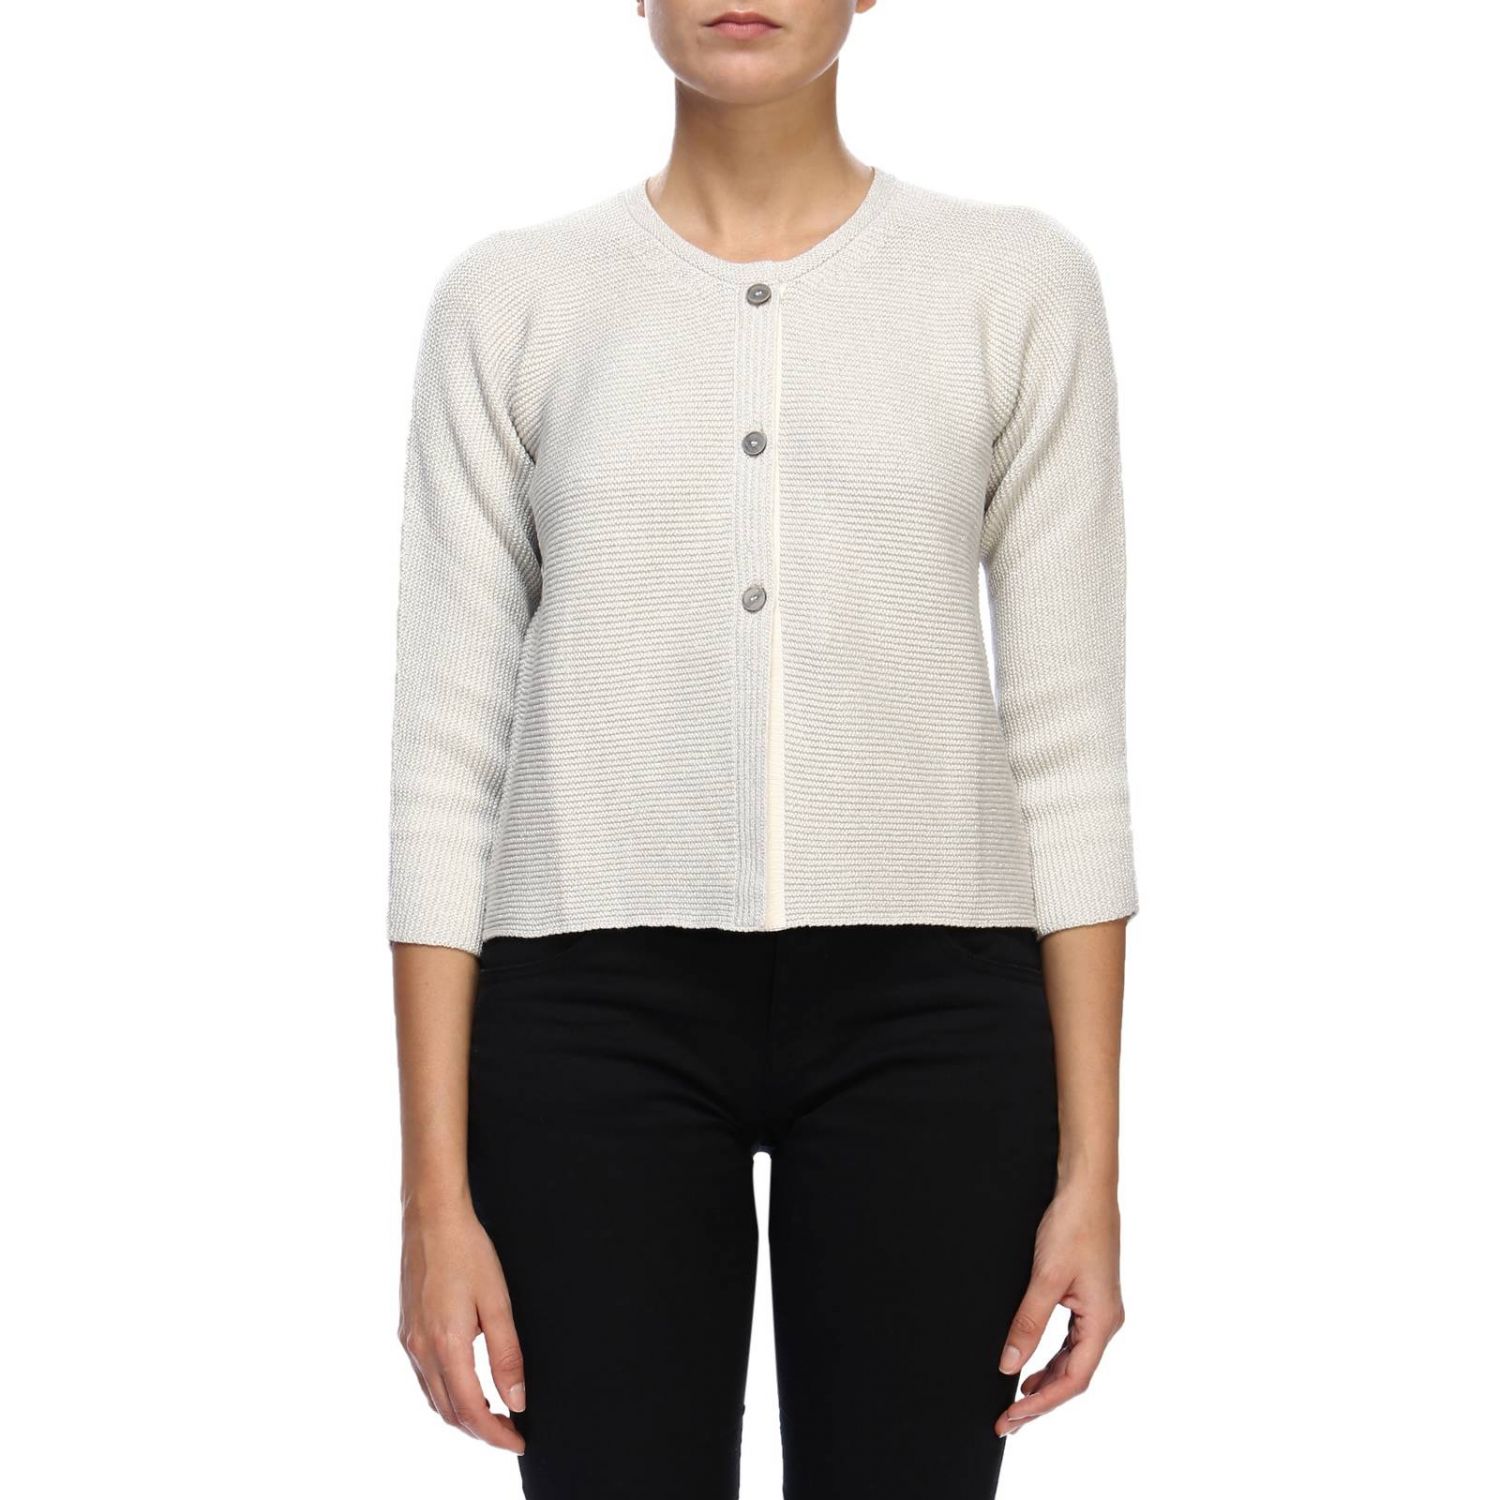 Gran Sasso Outlet: Sweater women - Beige | Sweater Gran Sasso 24221 ...